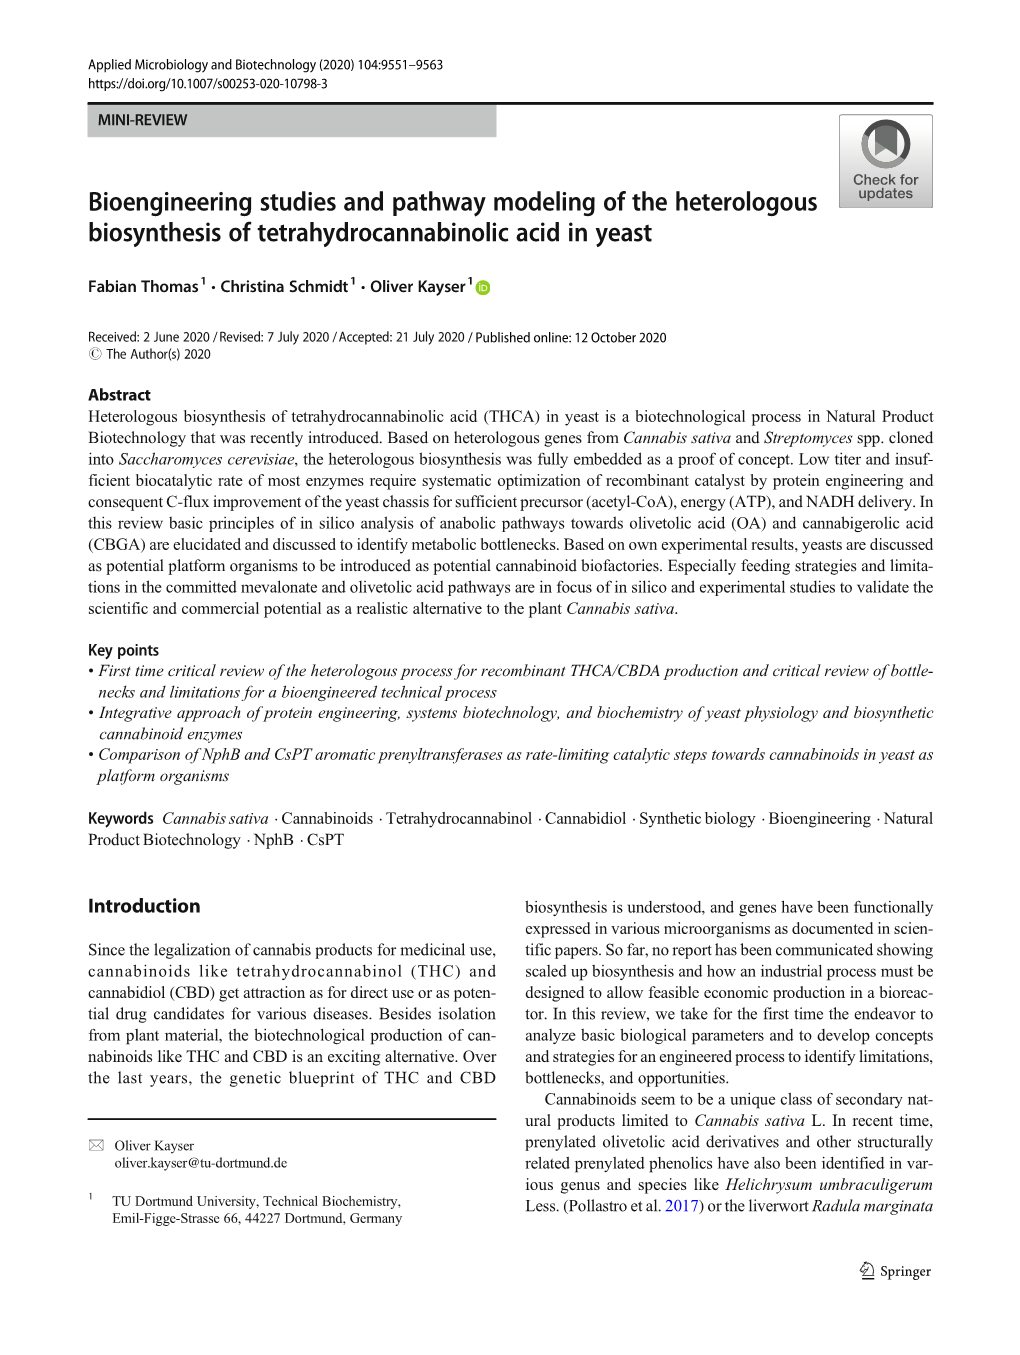 Bioengineering Studies and Pathway Modeling of the Heterologous Biosynthesis of Tetrahydrocannabinolic Acid in Yeast